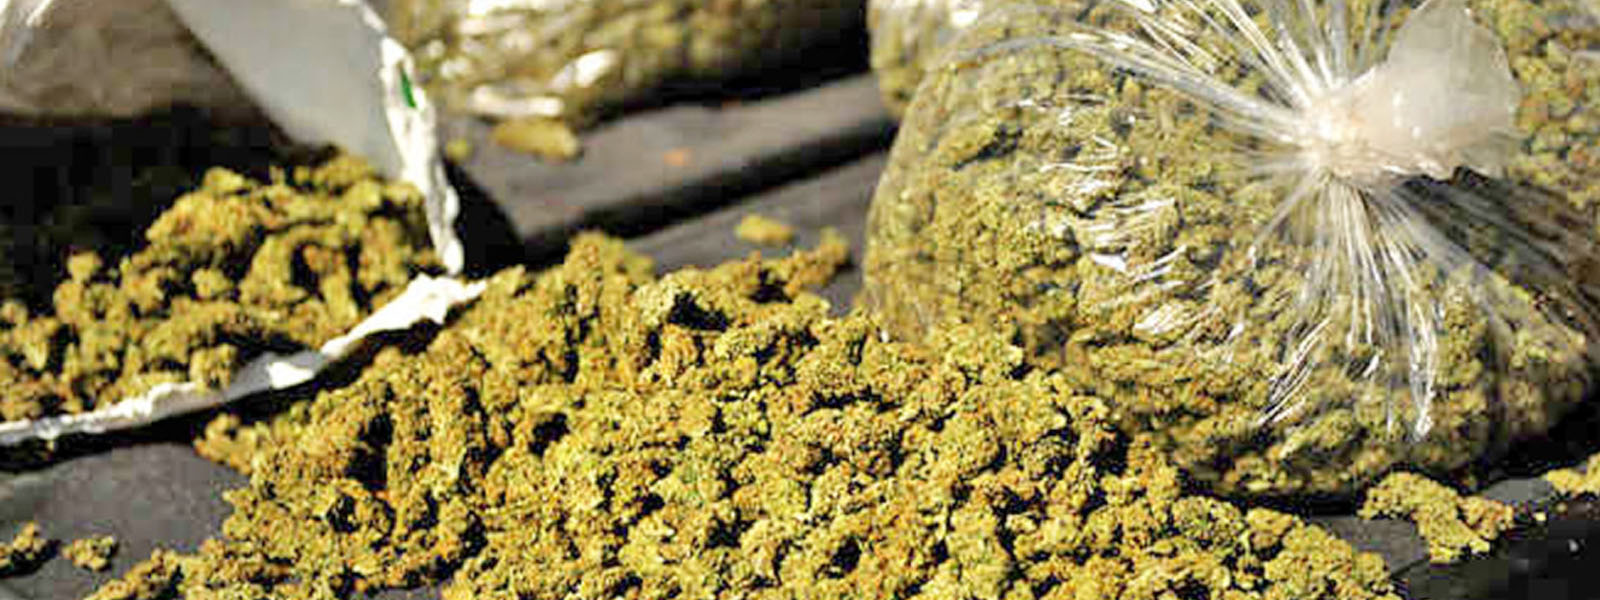 Kerala cannabis worth Rs. 1 mn seized in Wilpattu